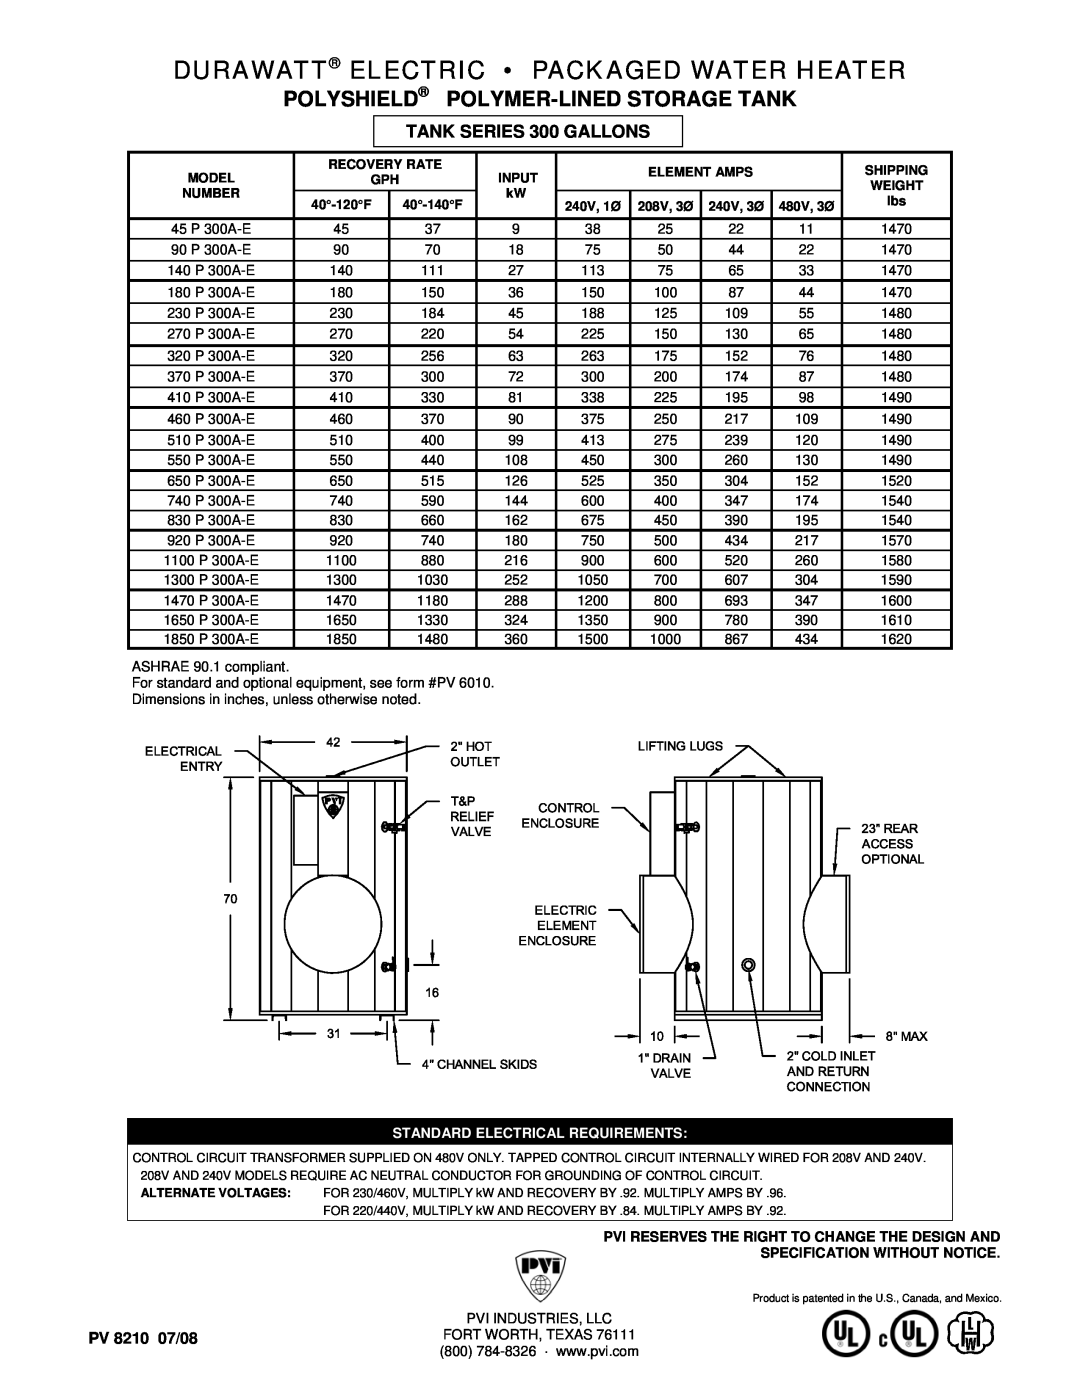 PVI Industries 740N300A-E dimensions Durawatt Electric Packaged Water Heater, Polyshield Polymer-Linedstorage Tank 